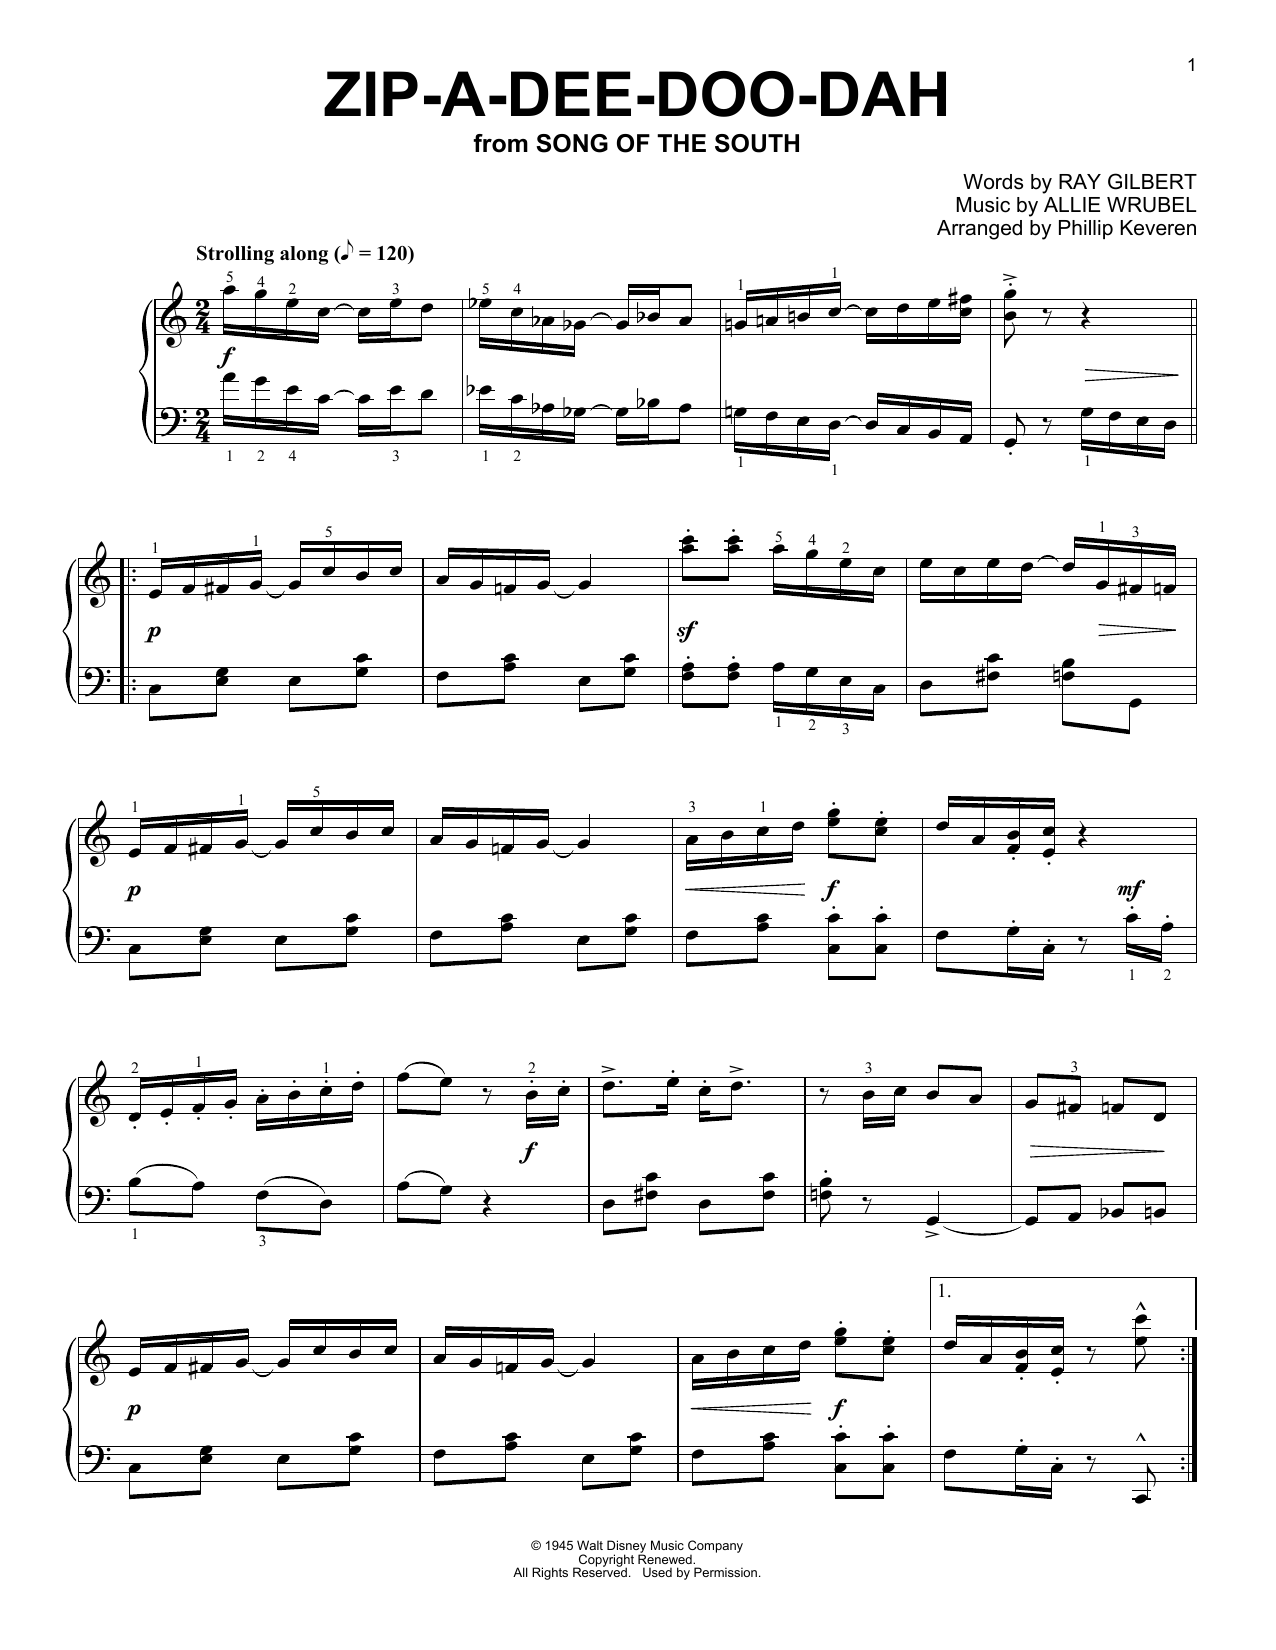 Allie Wrubel Zip-A-Dee-Doo-Dah [Ragtime version] (arr. Phillip Keveren) Sheet Music Notes & Chords for Piano - Download or Print PDF